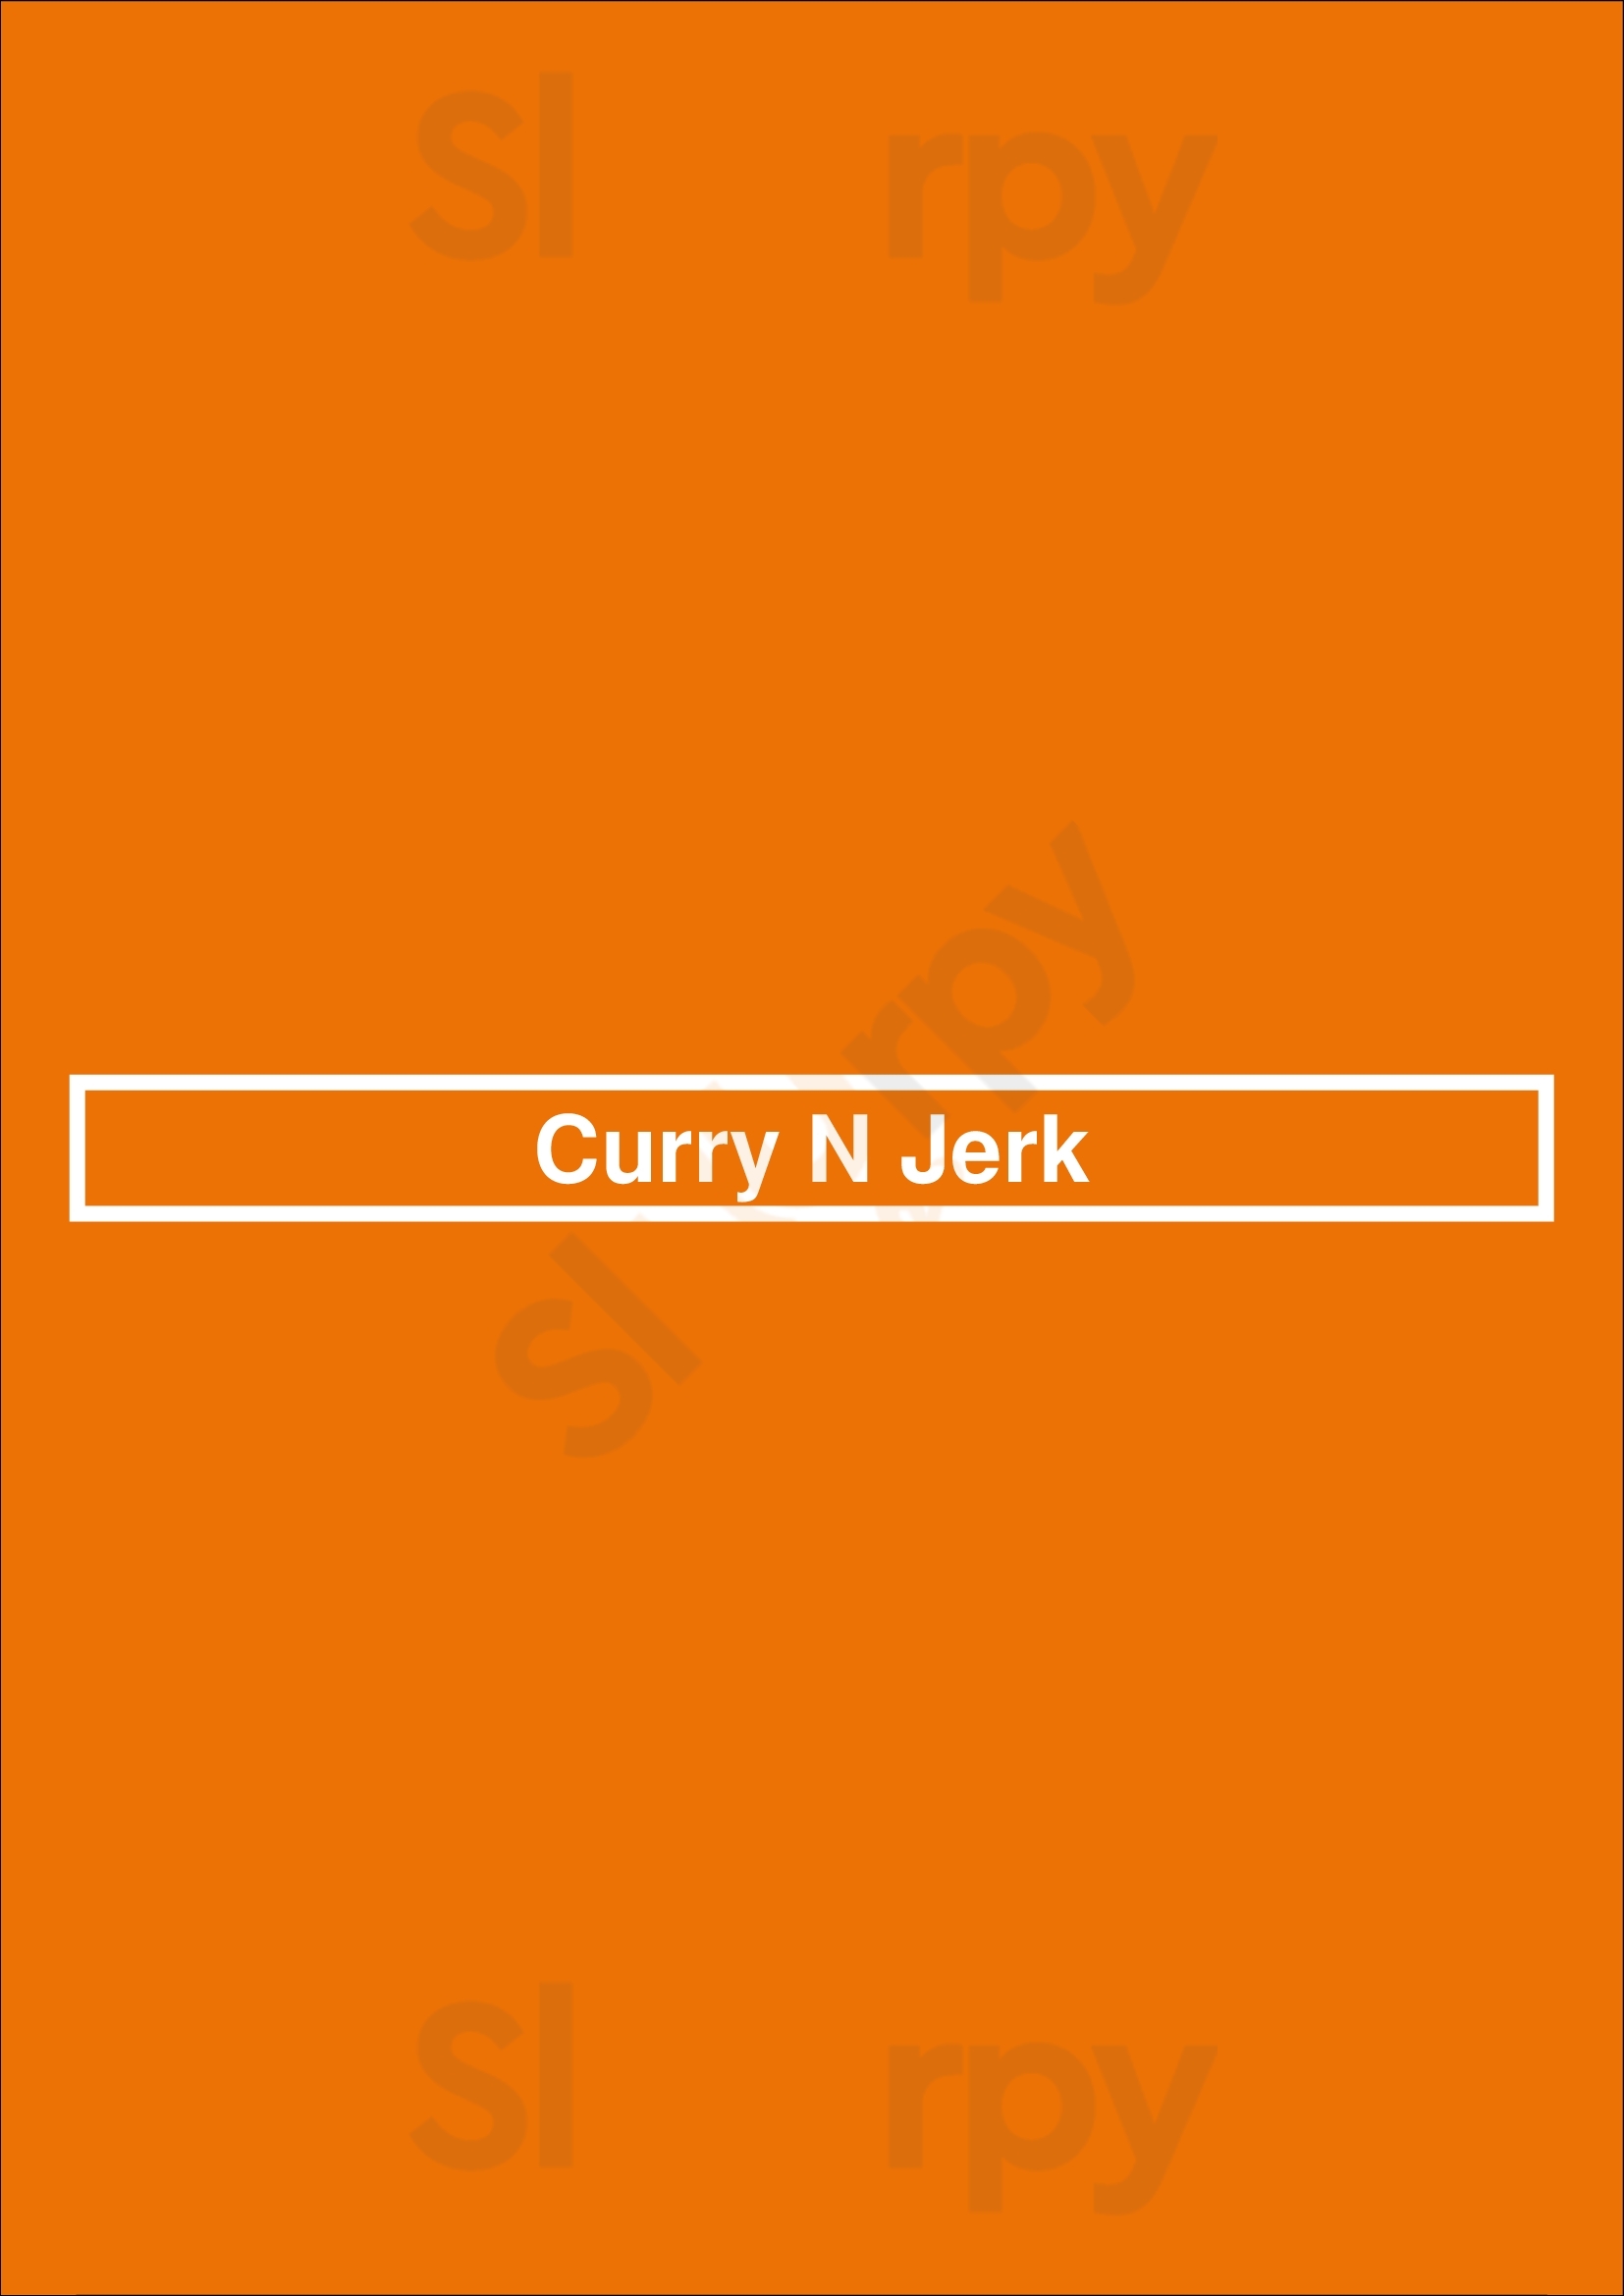 Curry N Jerk Memphis Menu - 1